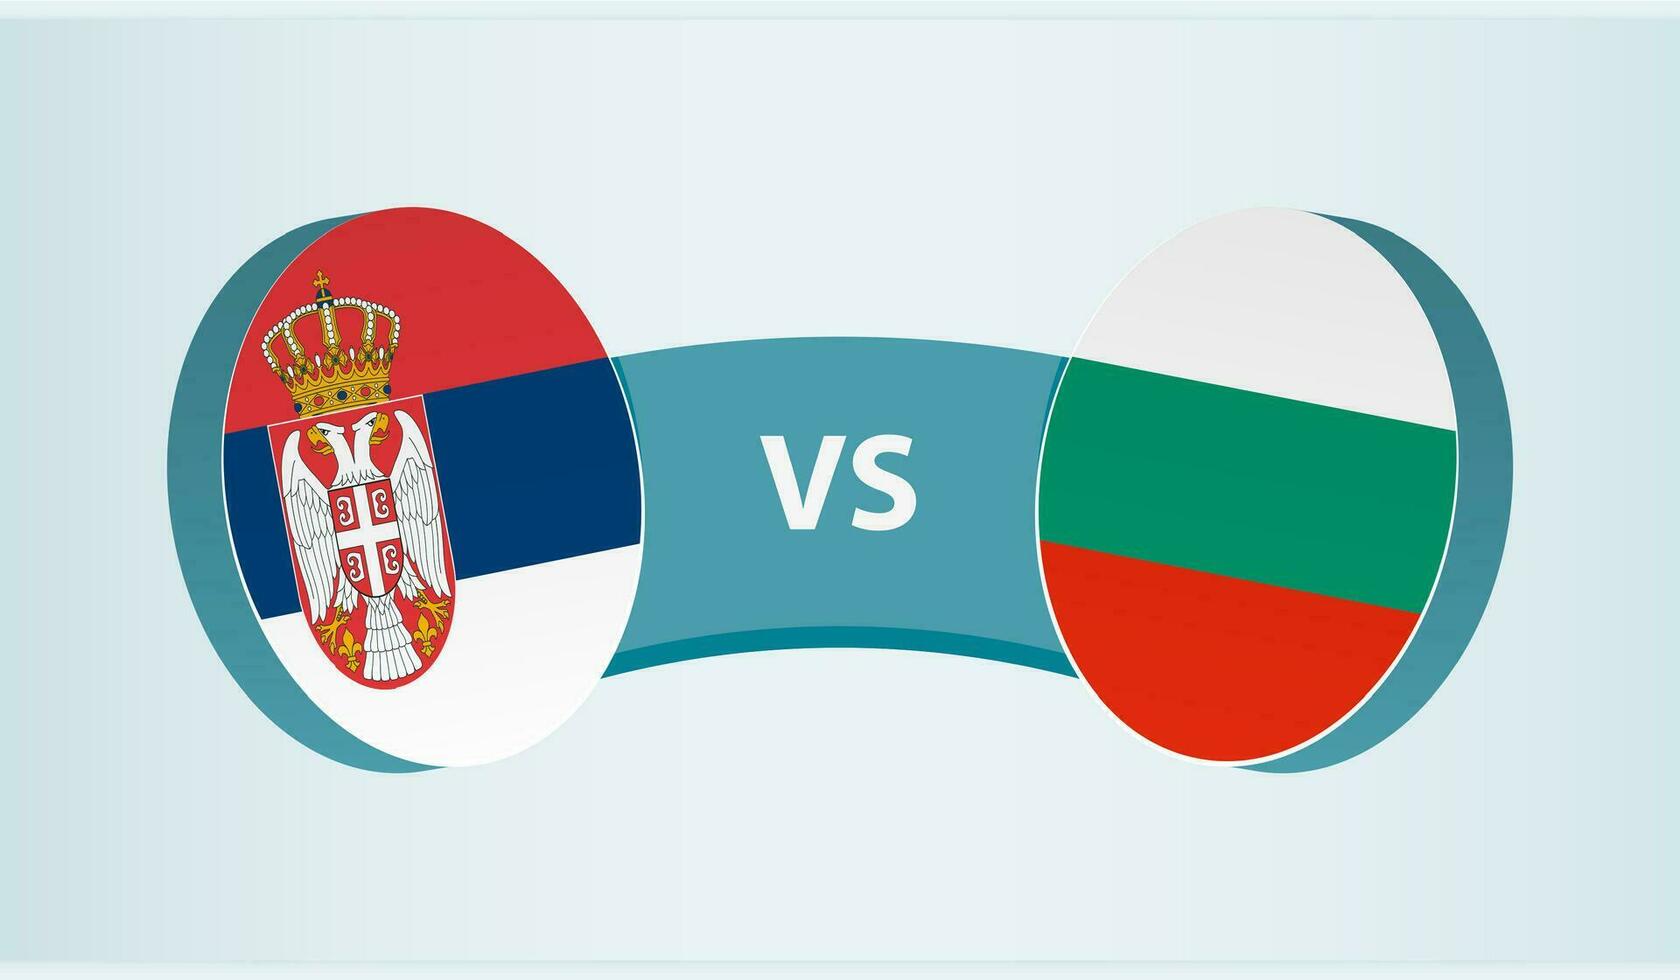 serbia mot bulgarien, team sporter konkurrens begrepp. vektor